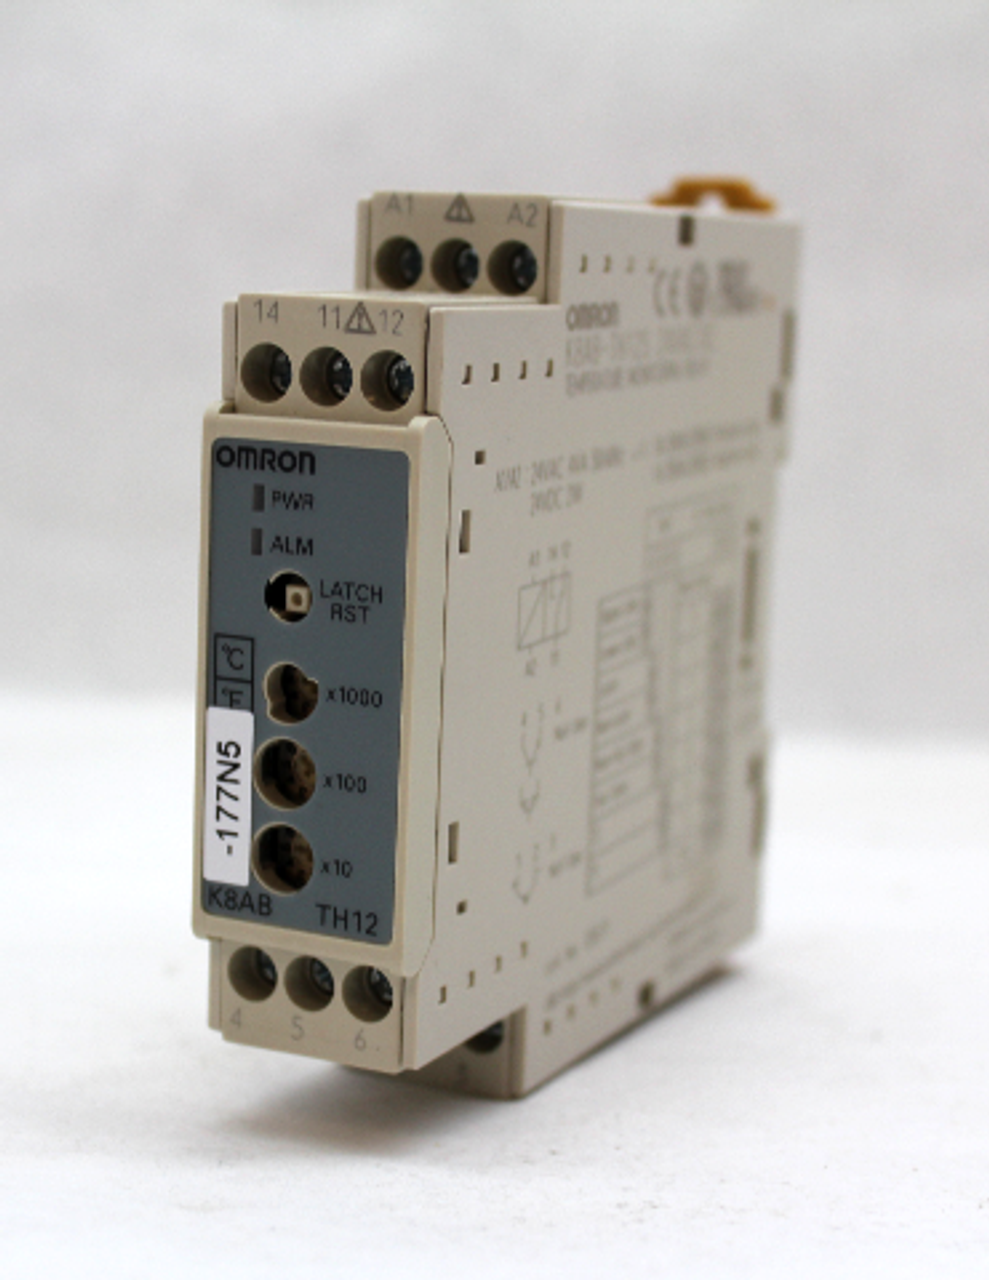 Omron K8AB-TH12S Temperature Monitoring Relay